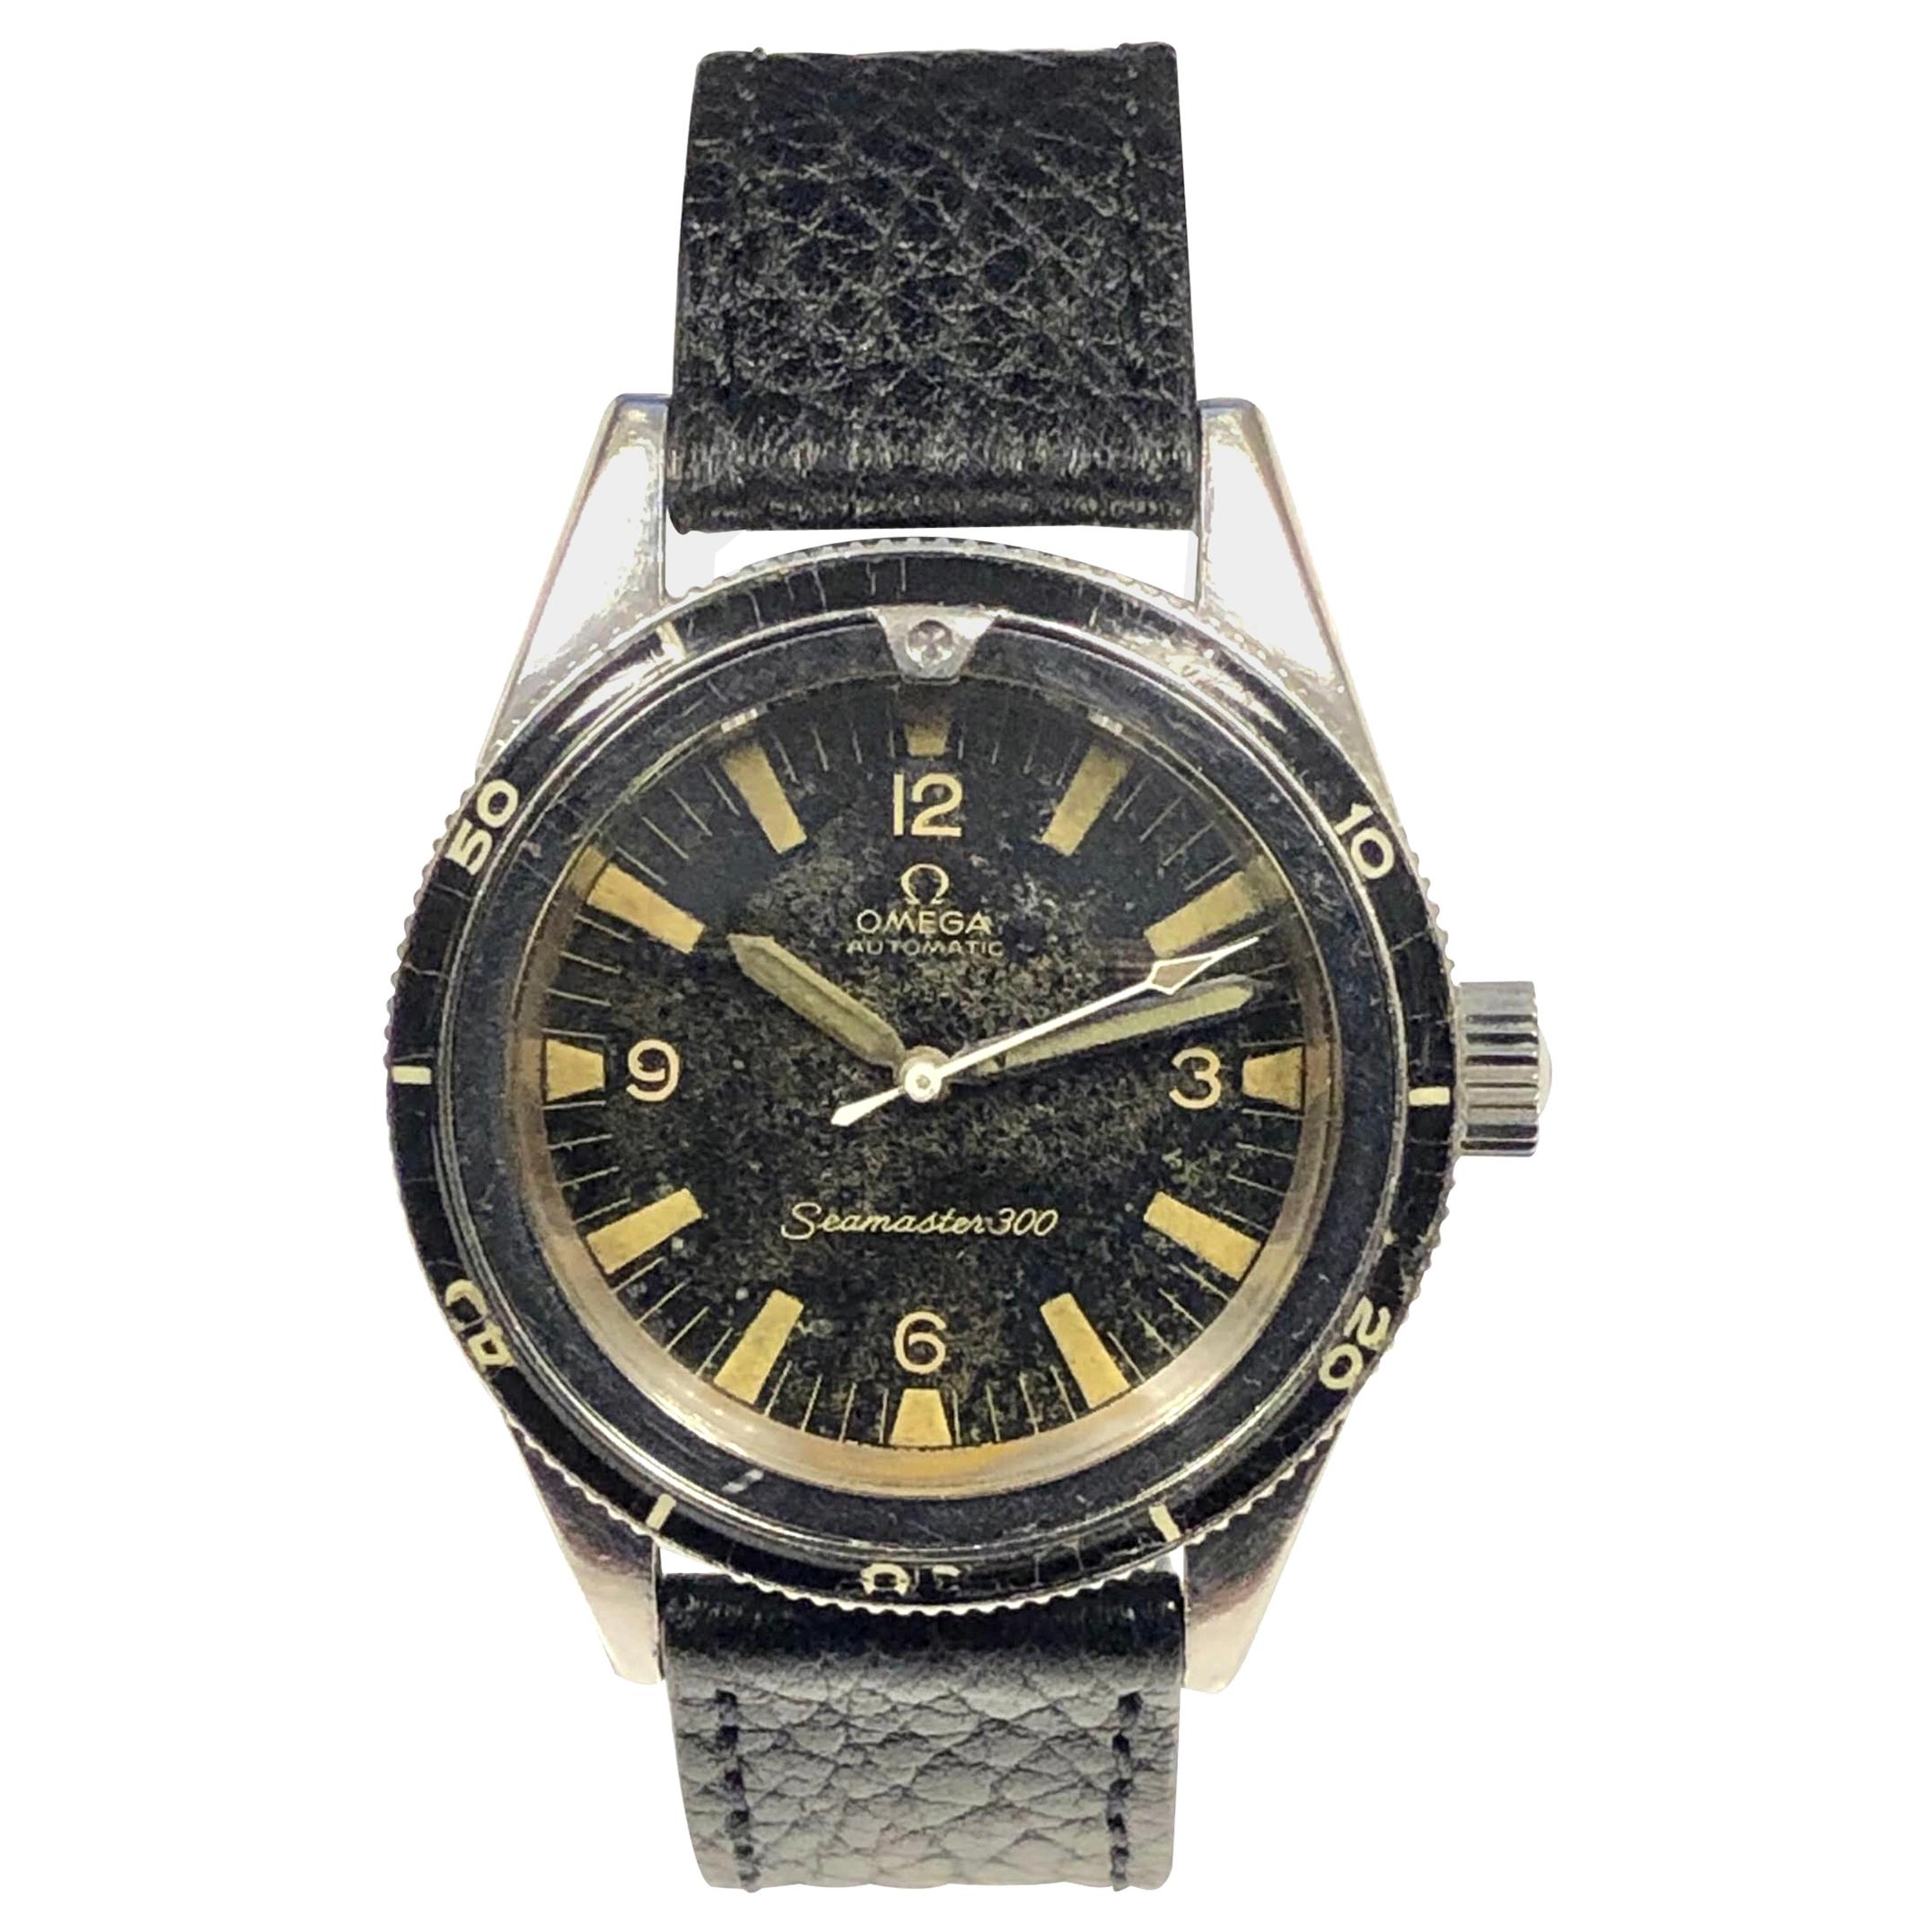 1962 Omega Seamaster 300 Divers Wristwatch